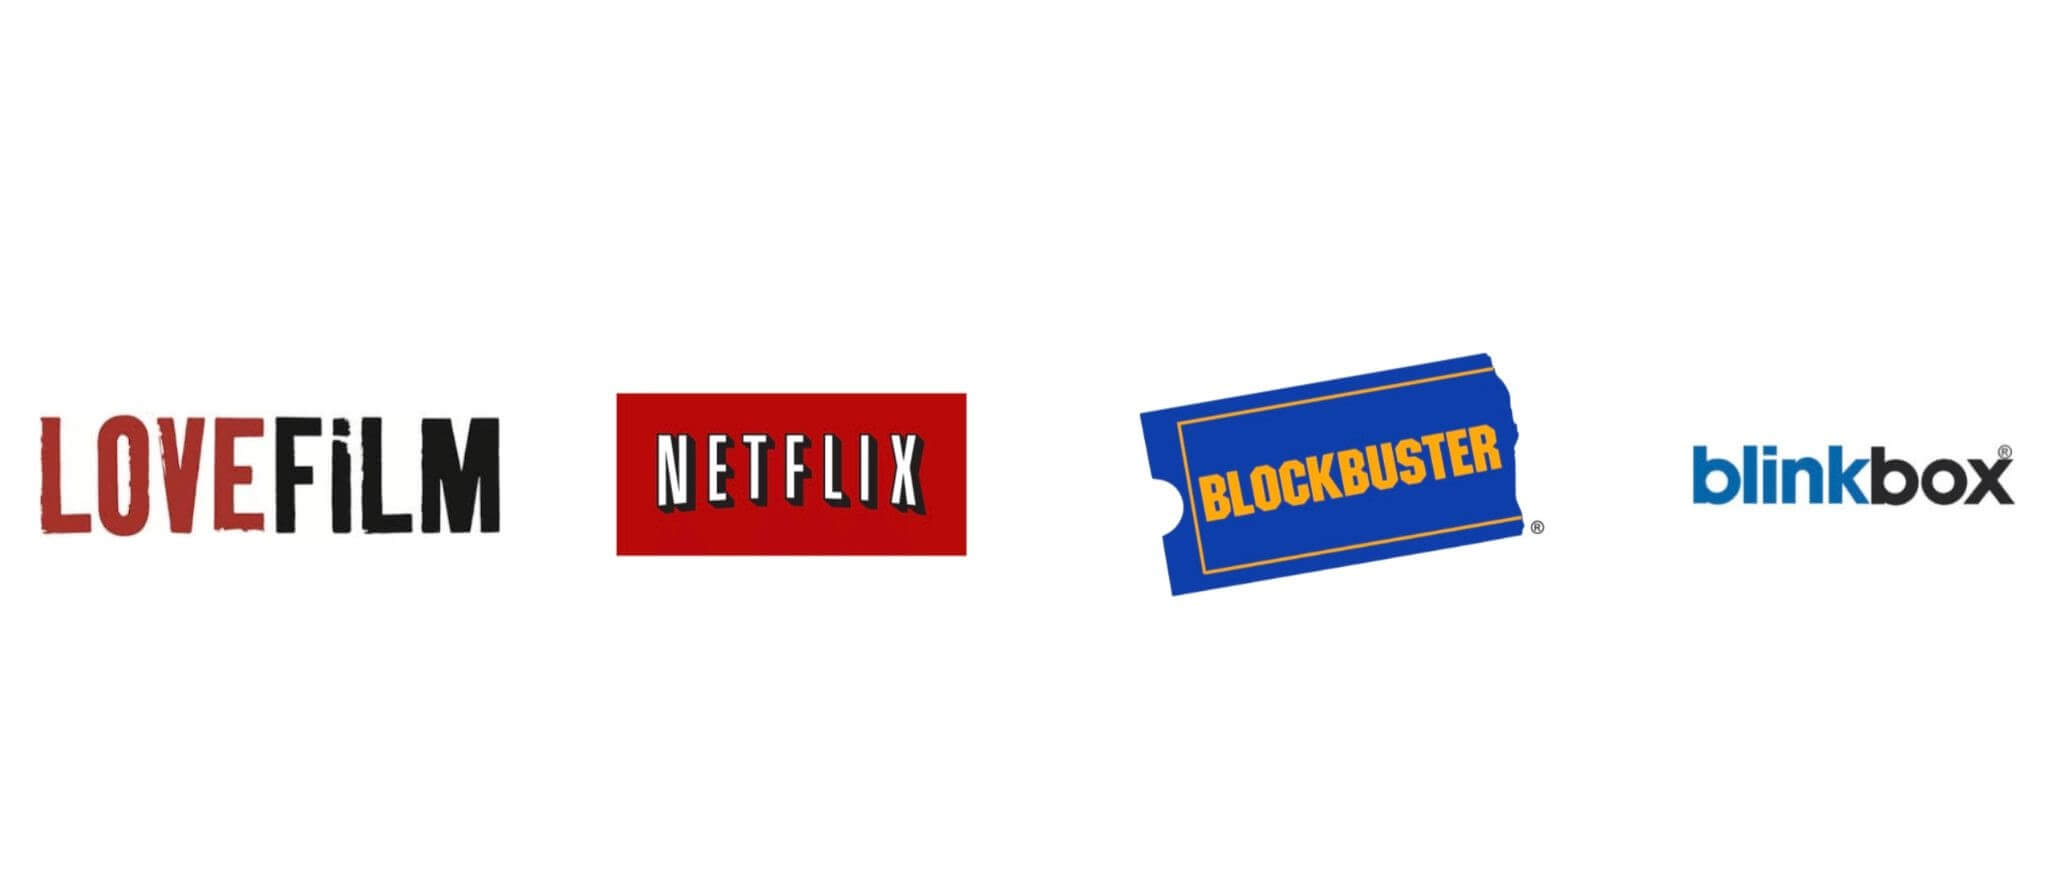 Lovefilm, Netflix, Blockbuster and Blinkbox logos